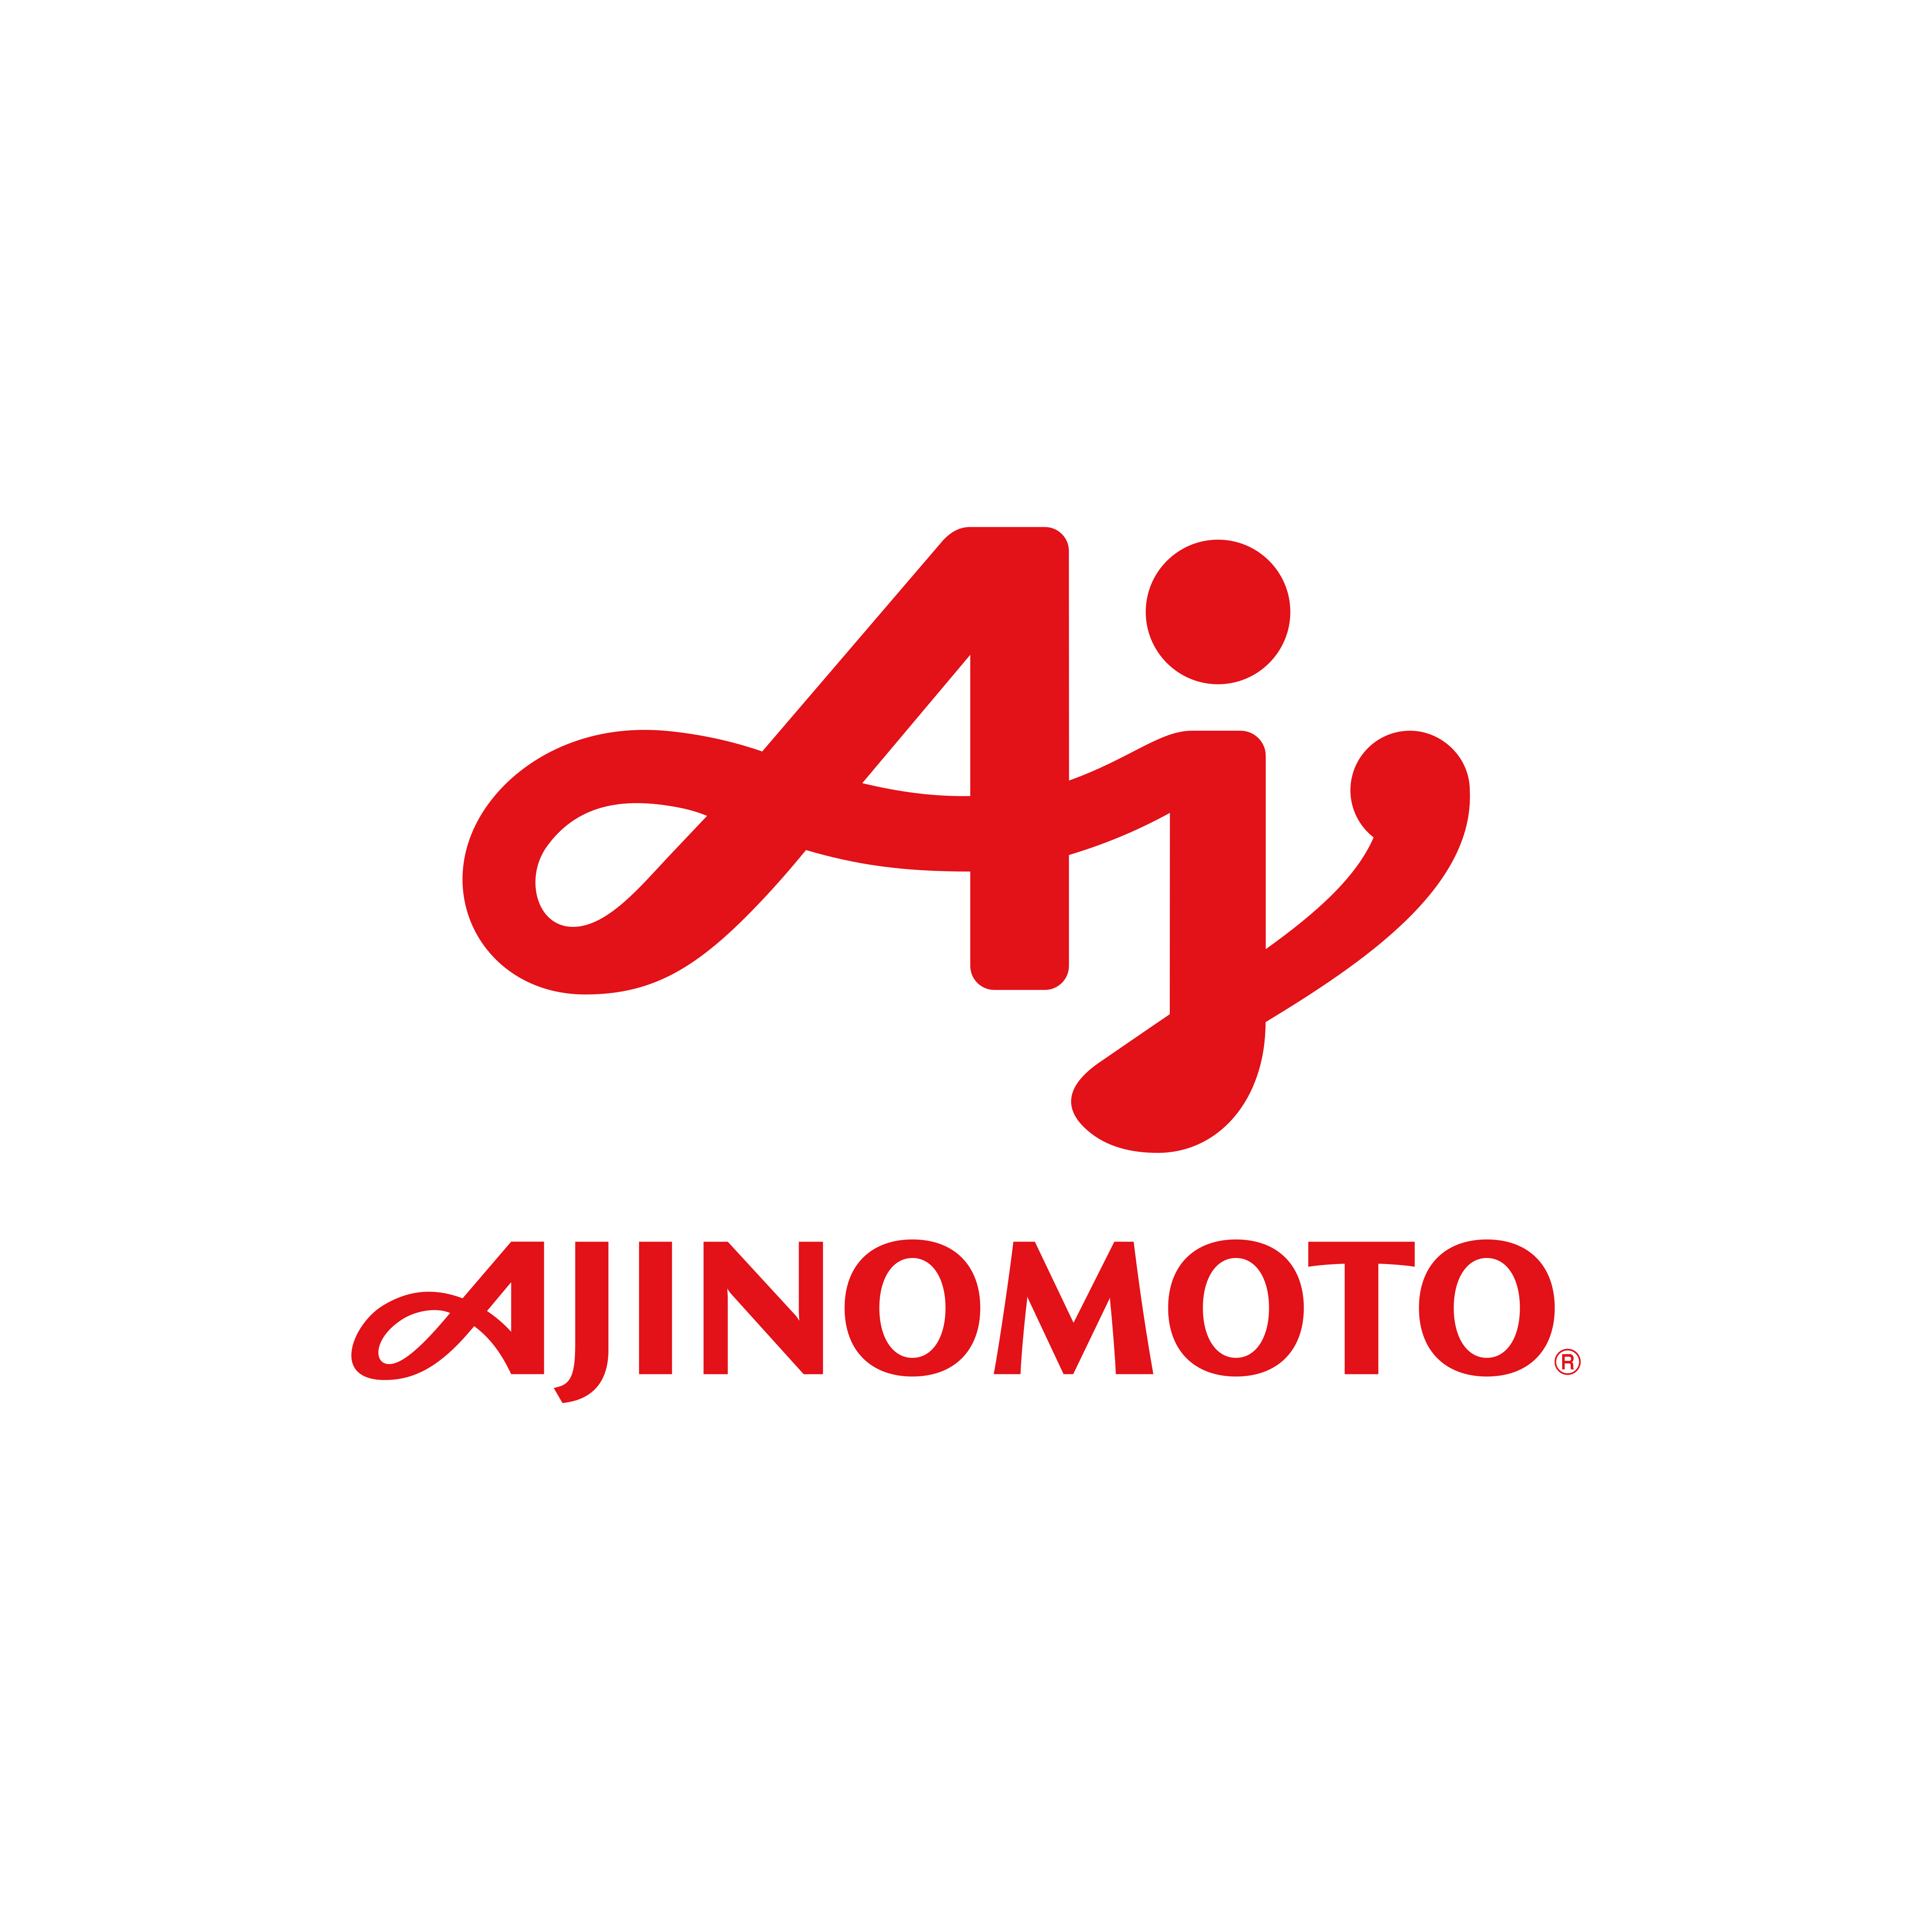 ajinomoto logo 0 - Ajinomoto Logo